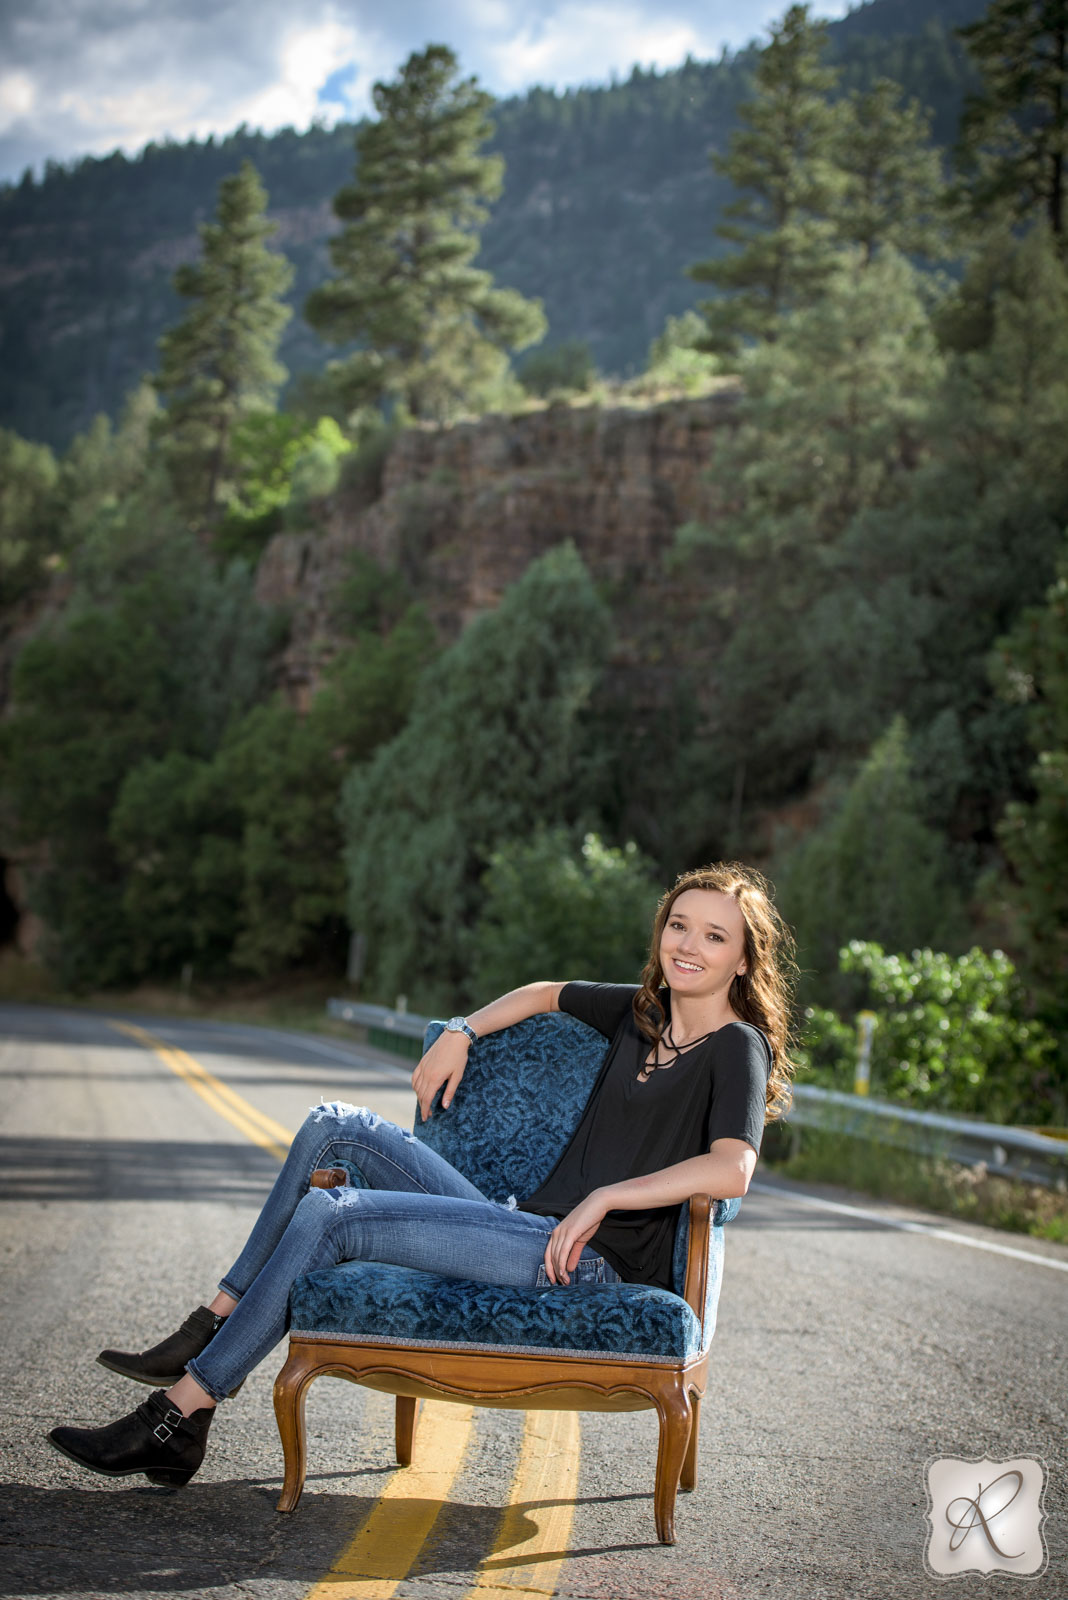 Senior portraits in Durango, Colorado - lounging in a chair